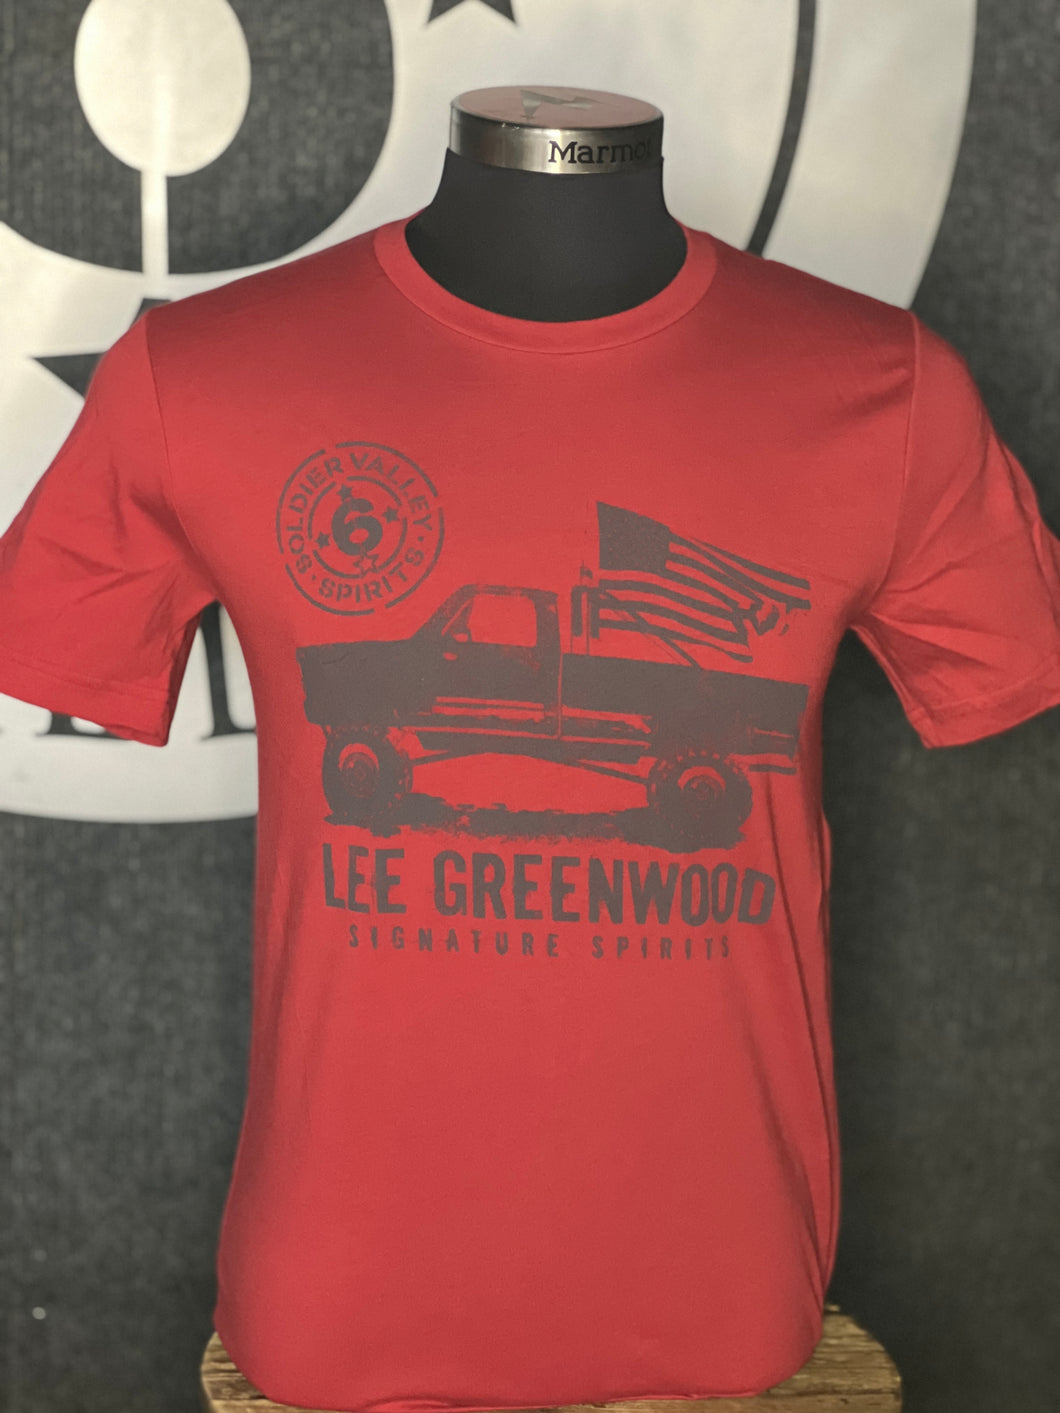 Lee Greenwood Truck T-shirt